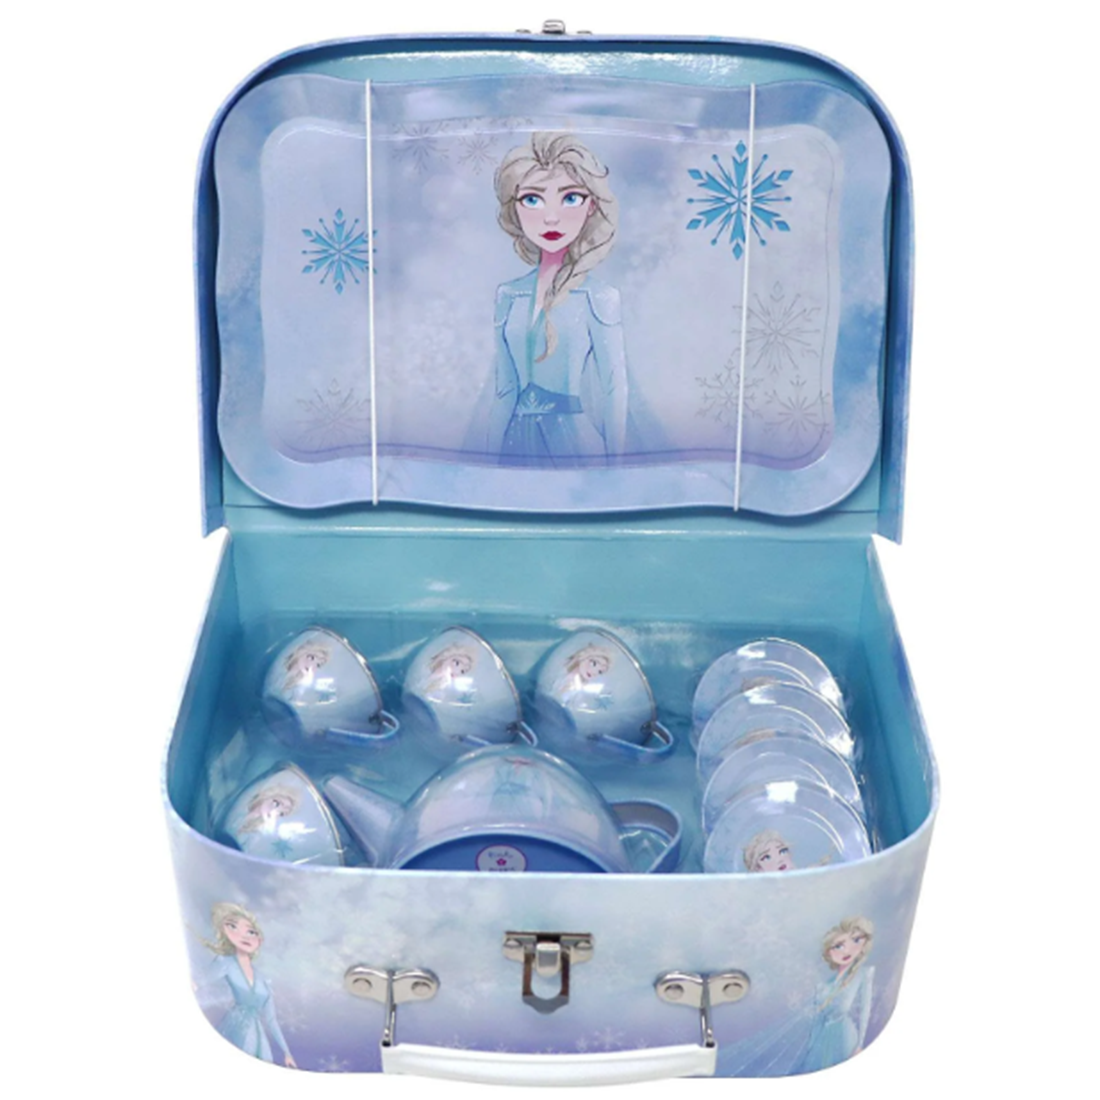 Disney Frozen Destiny Awaits 10 Piece Tea Set in Carry Case